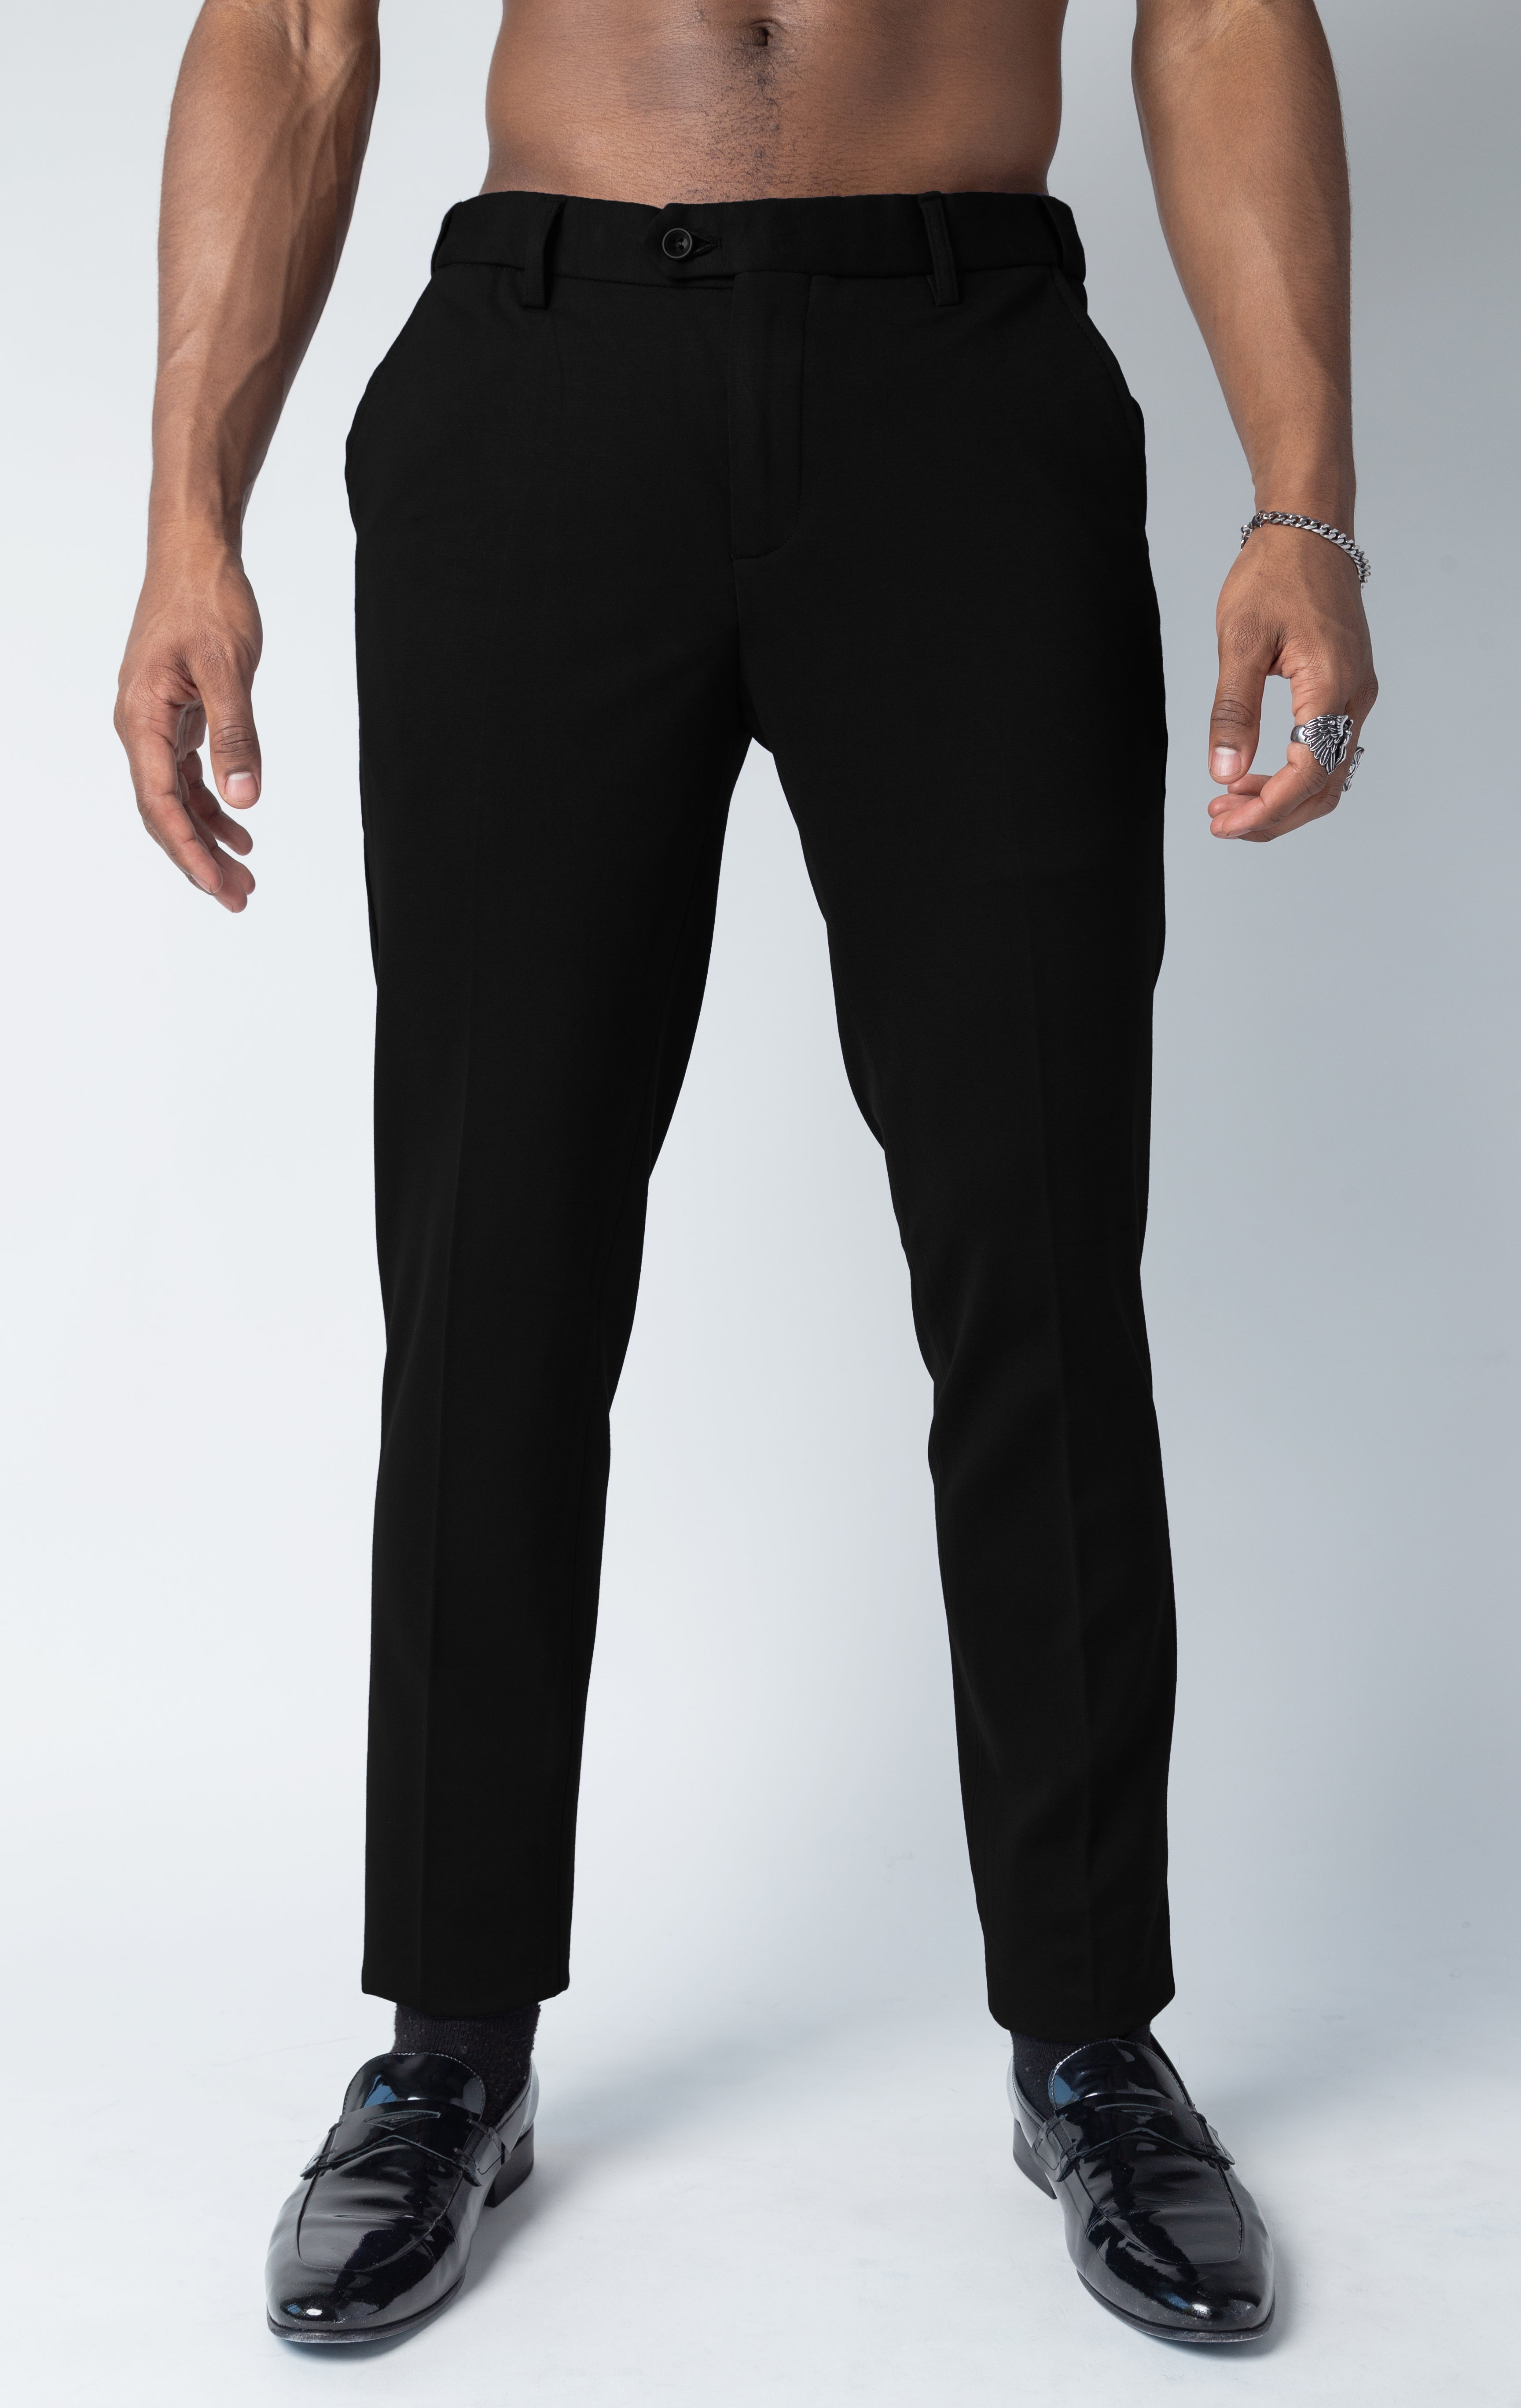 Black dress pants with elastic waistband technology